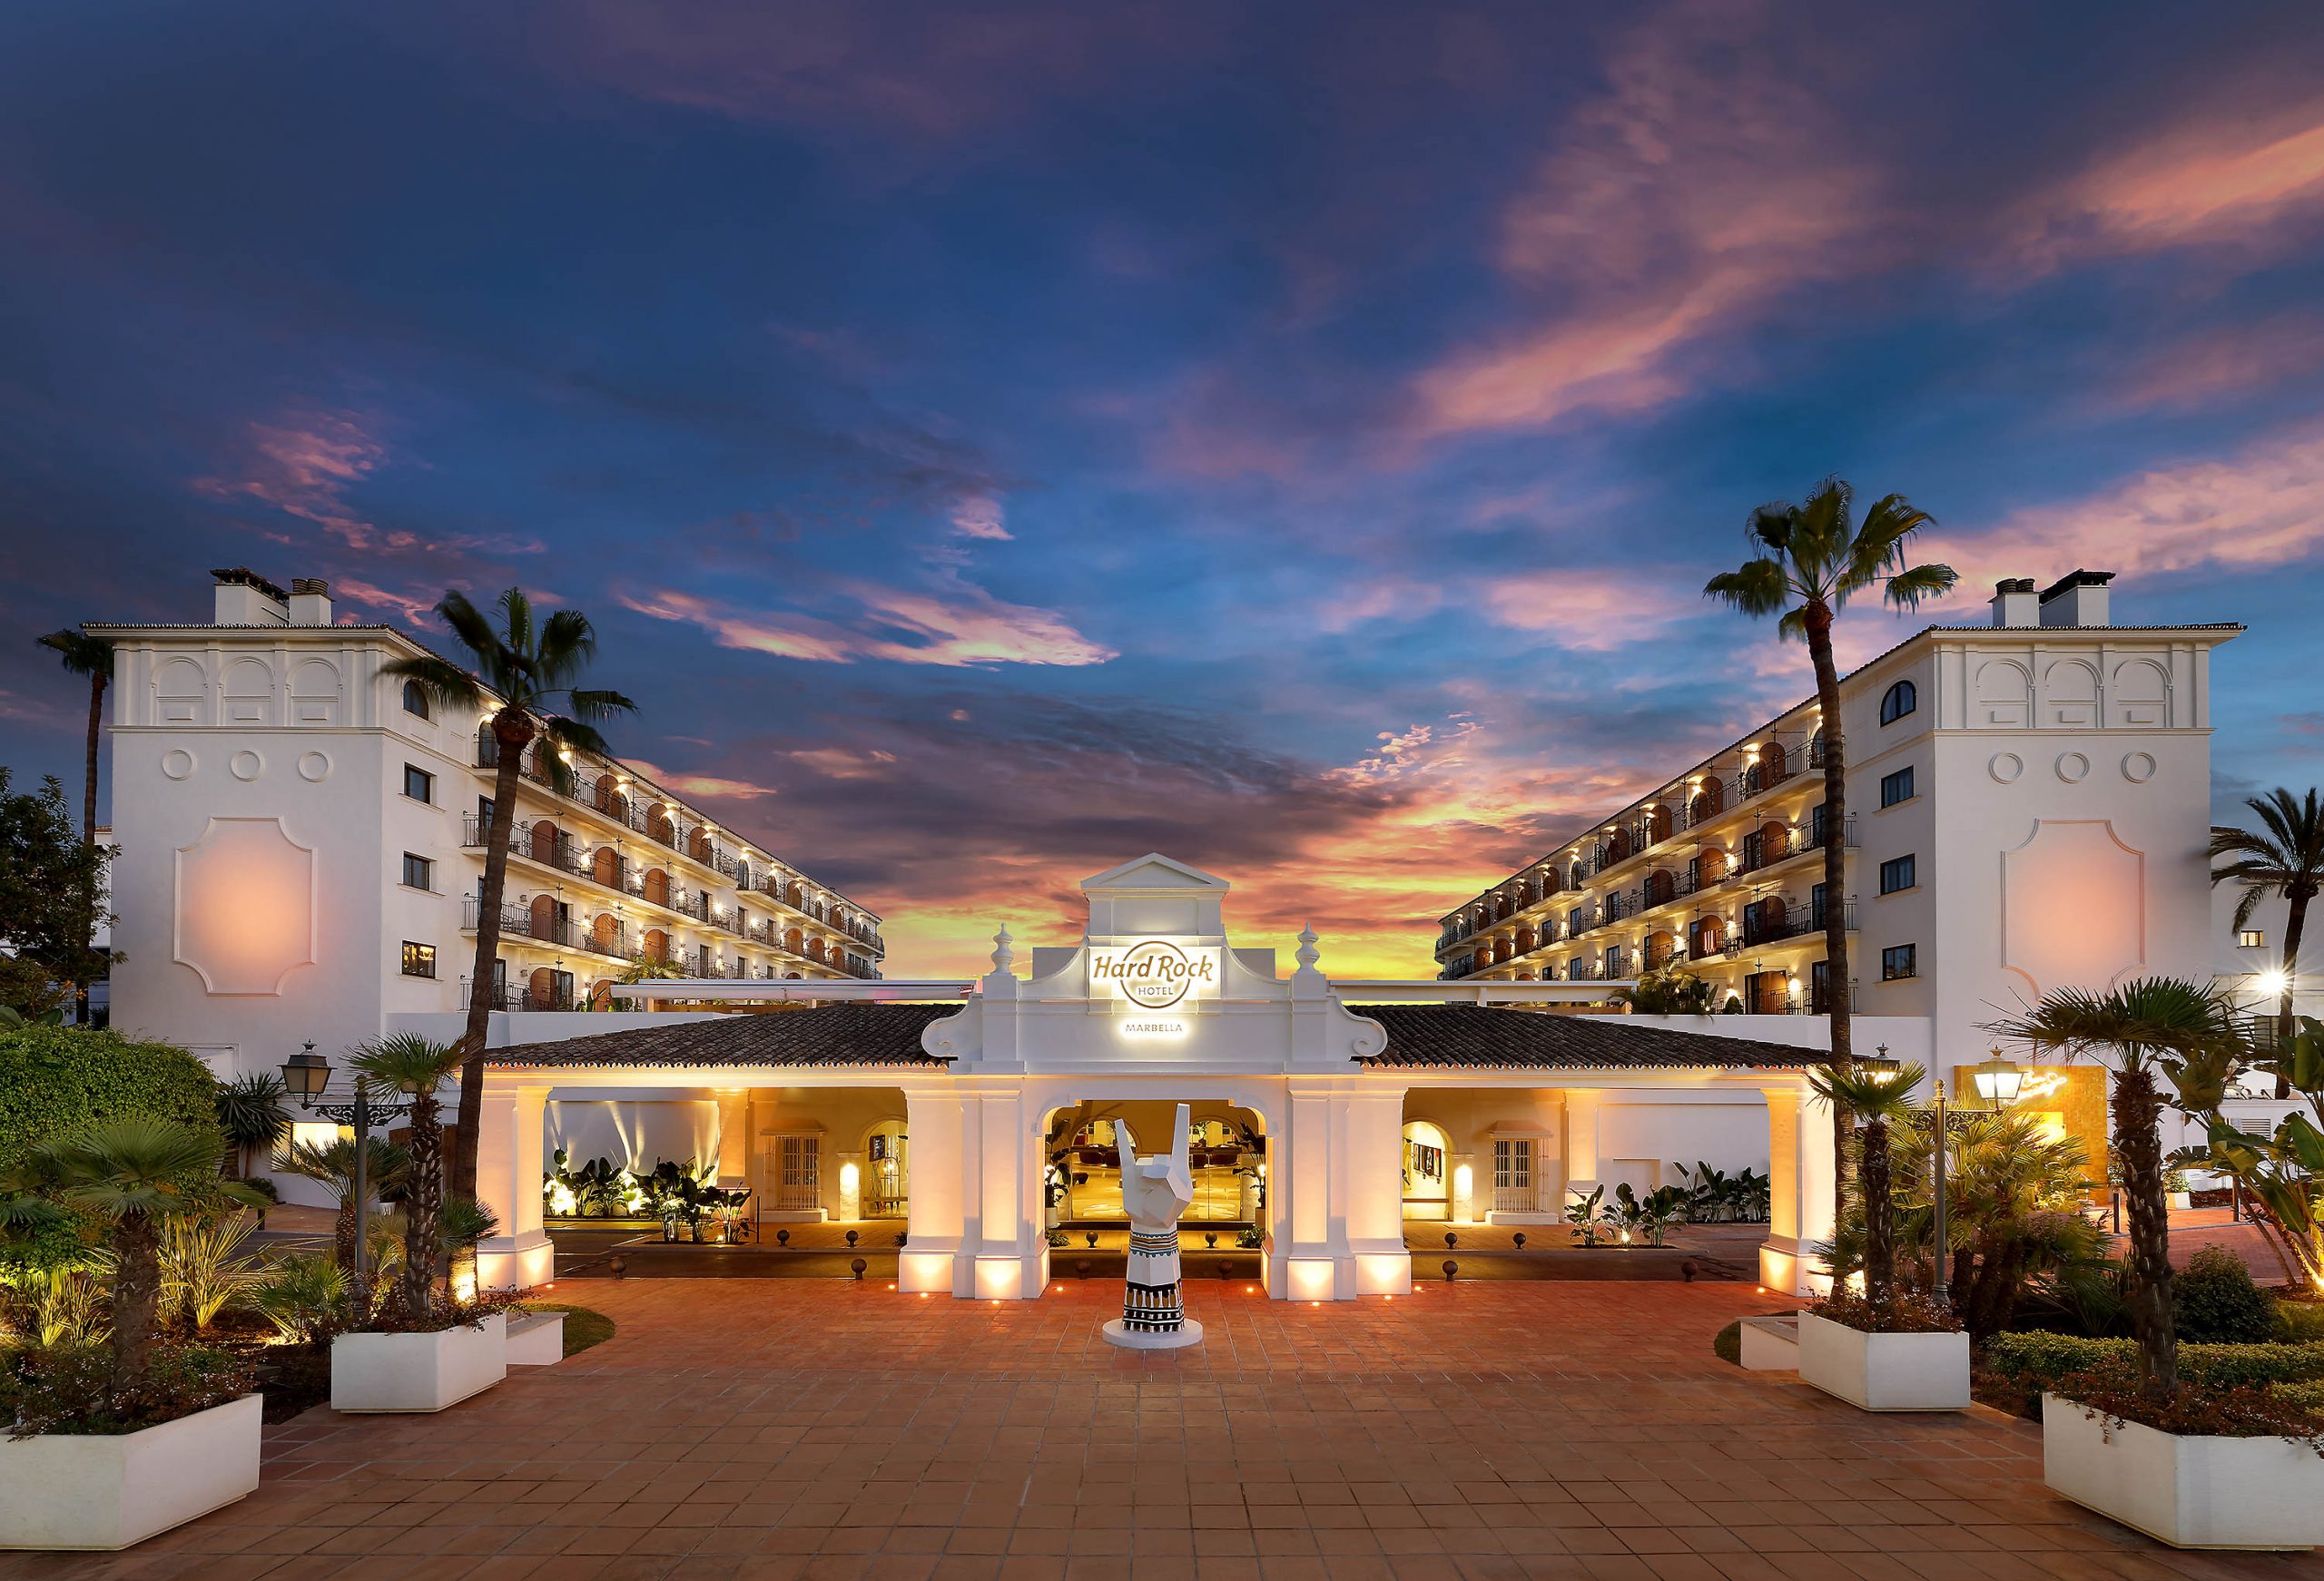 Welcome to the Hard Rock Hotel, Marbella, Costa del Sol, Spain